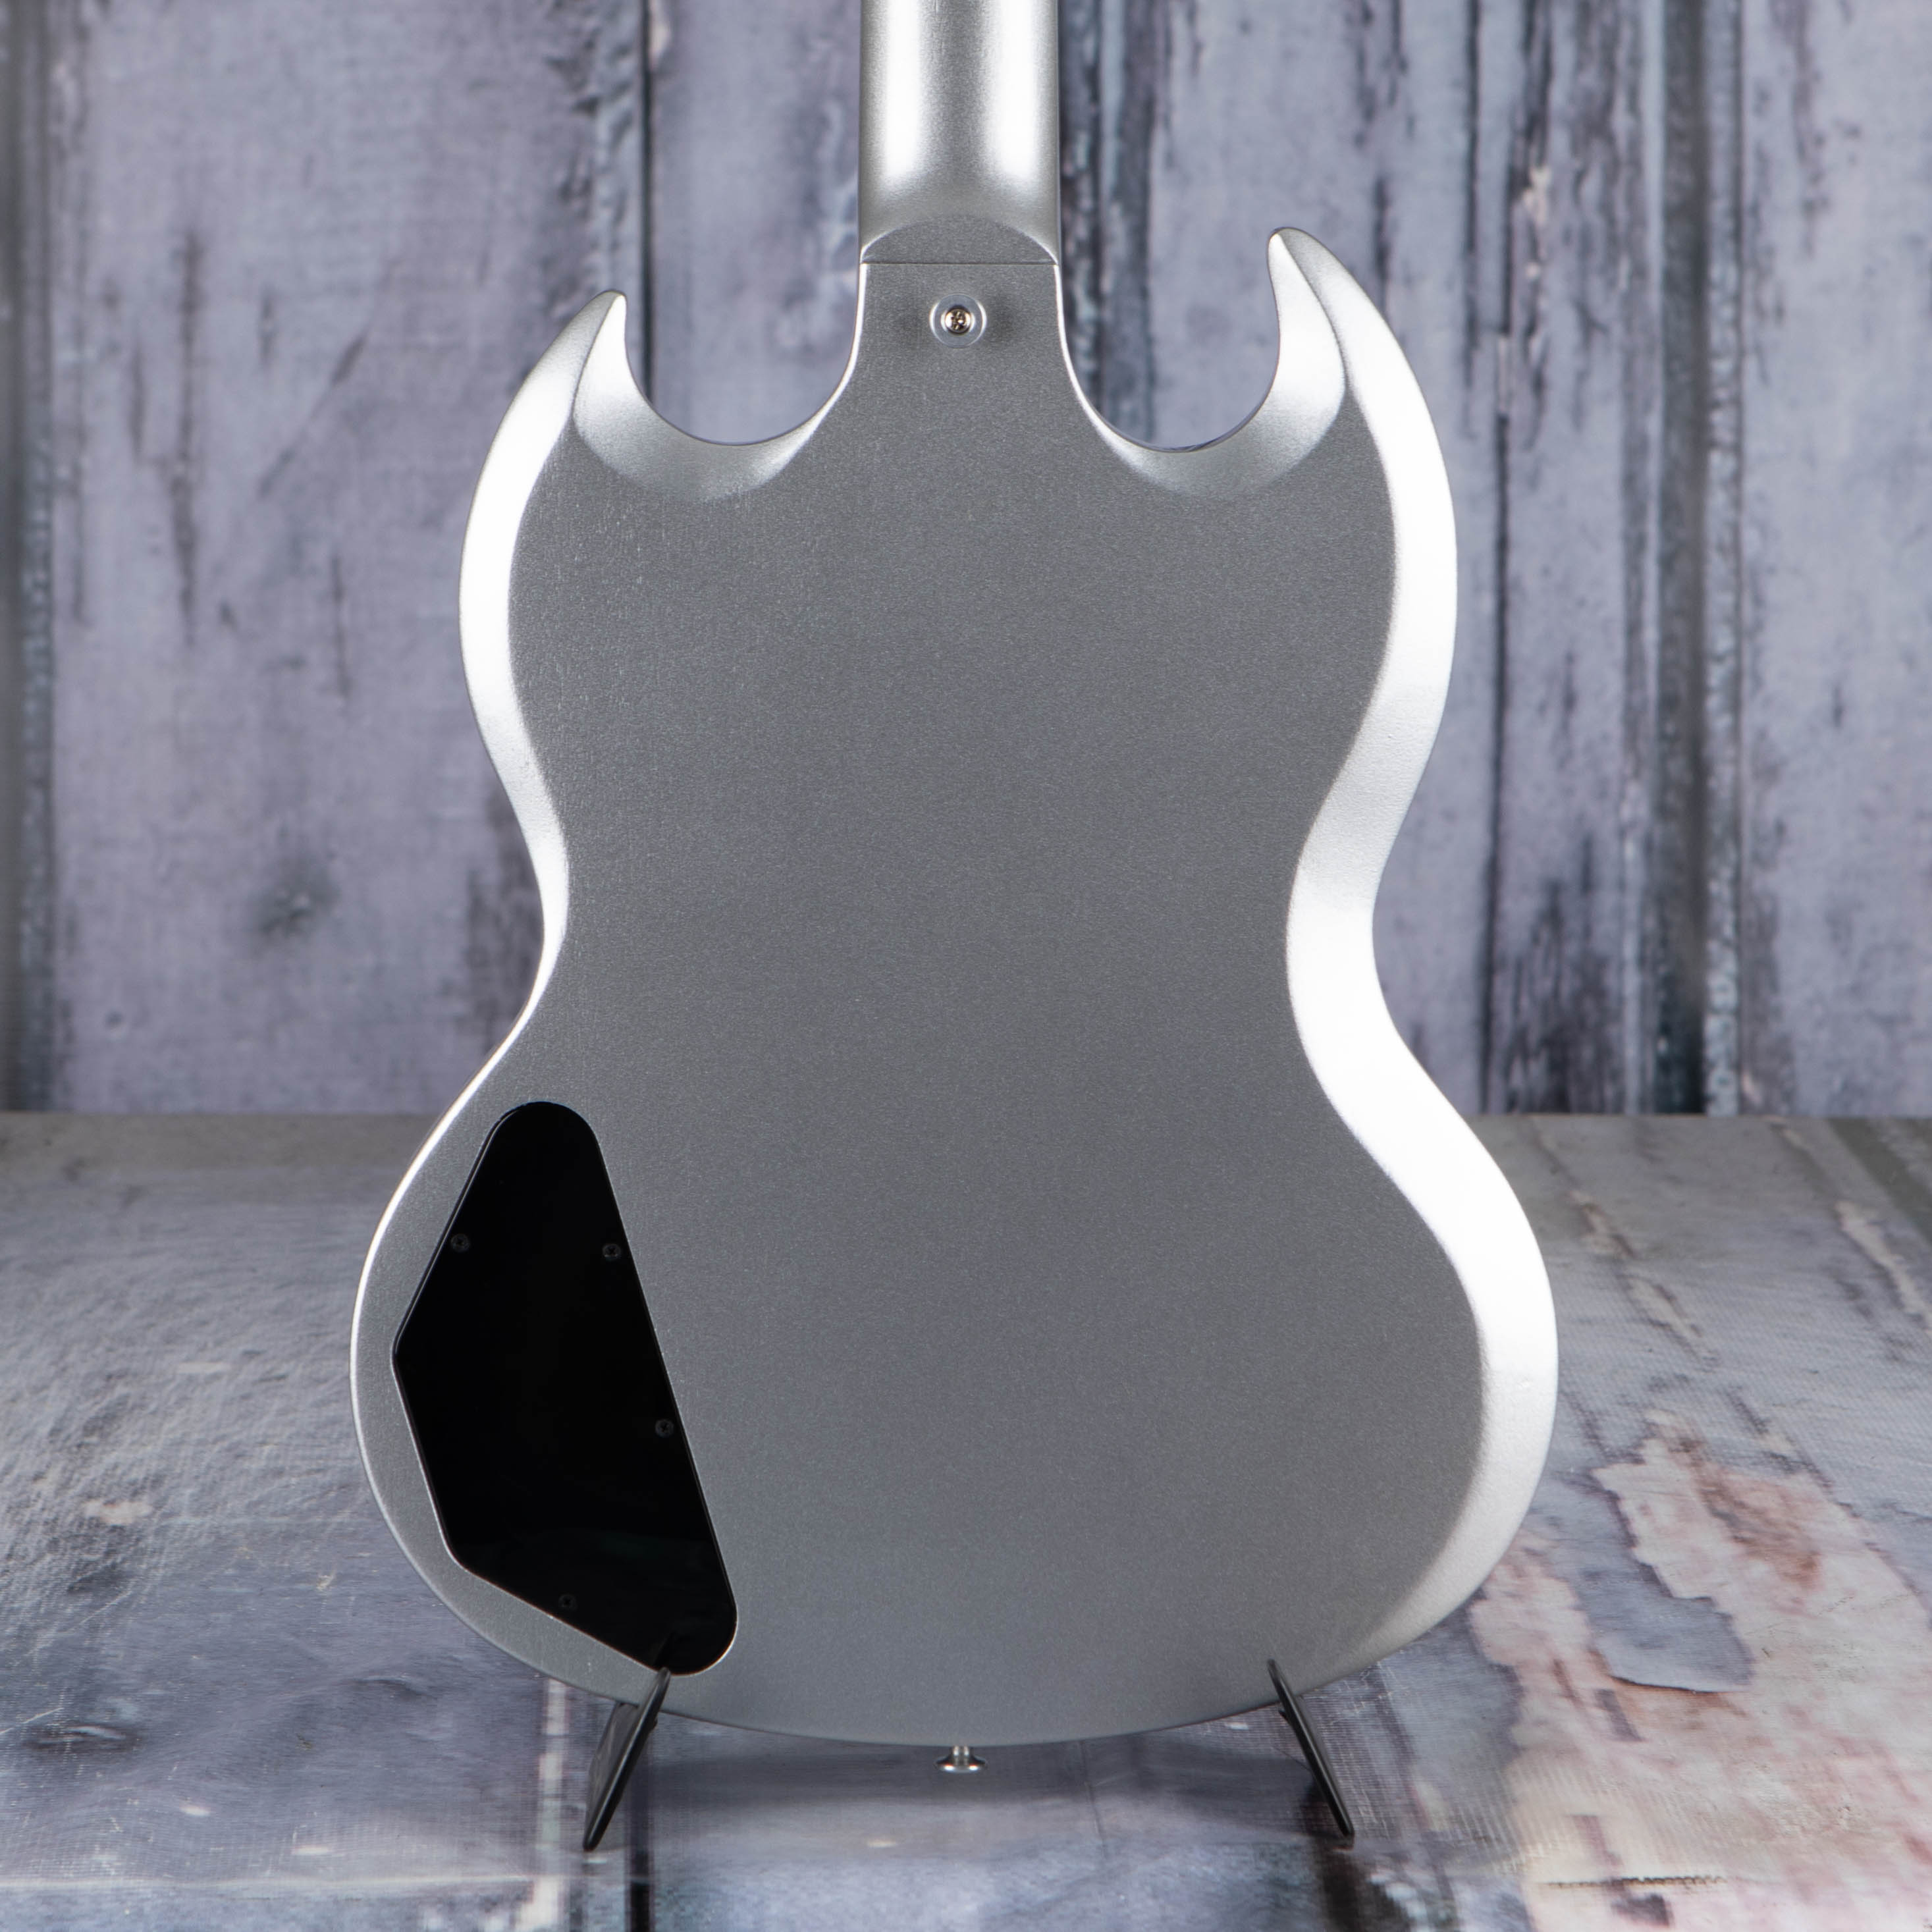 Gibson USA SG Standard Electric Guitar, Silver Metallic, back closeup